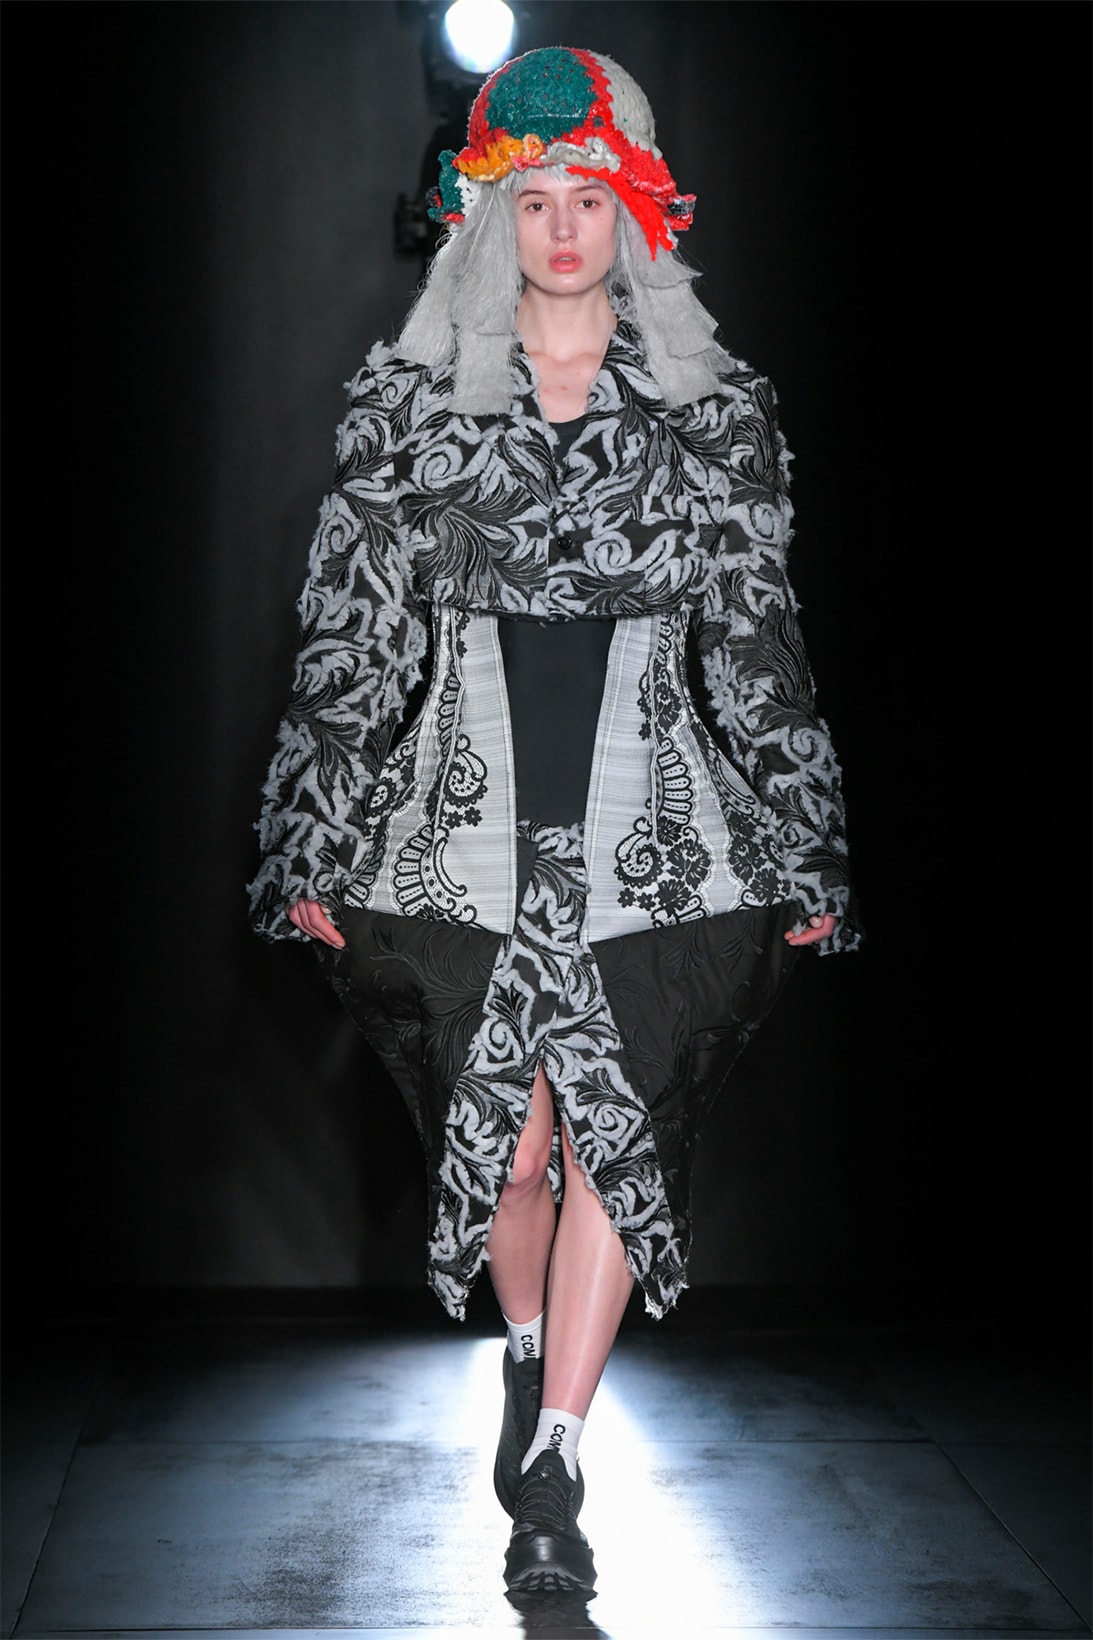 comme des garcons fall winter collection salomon pulsar platform tokyo runway show dress headpiece gray black red